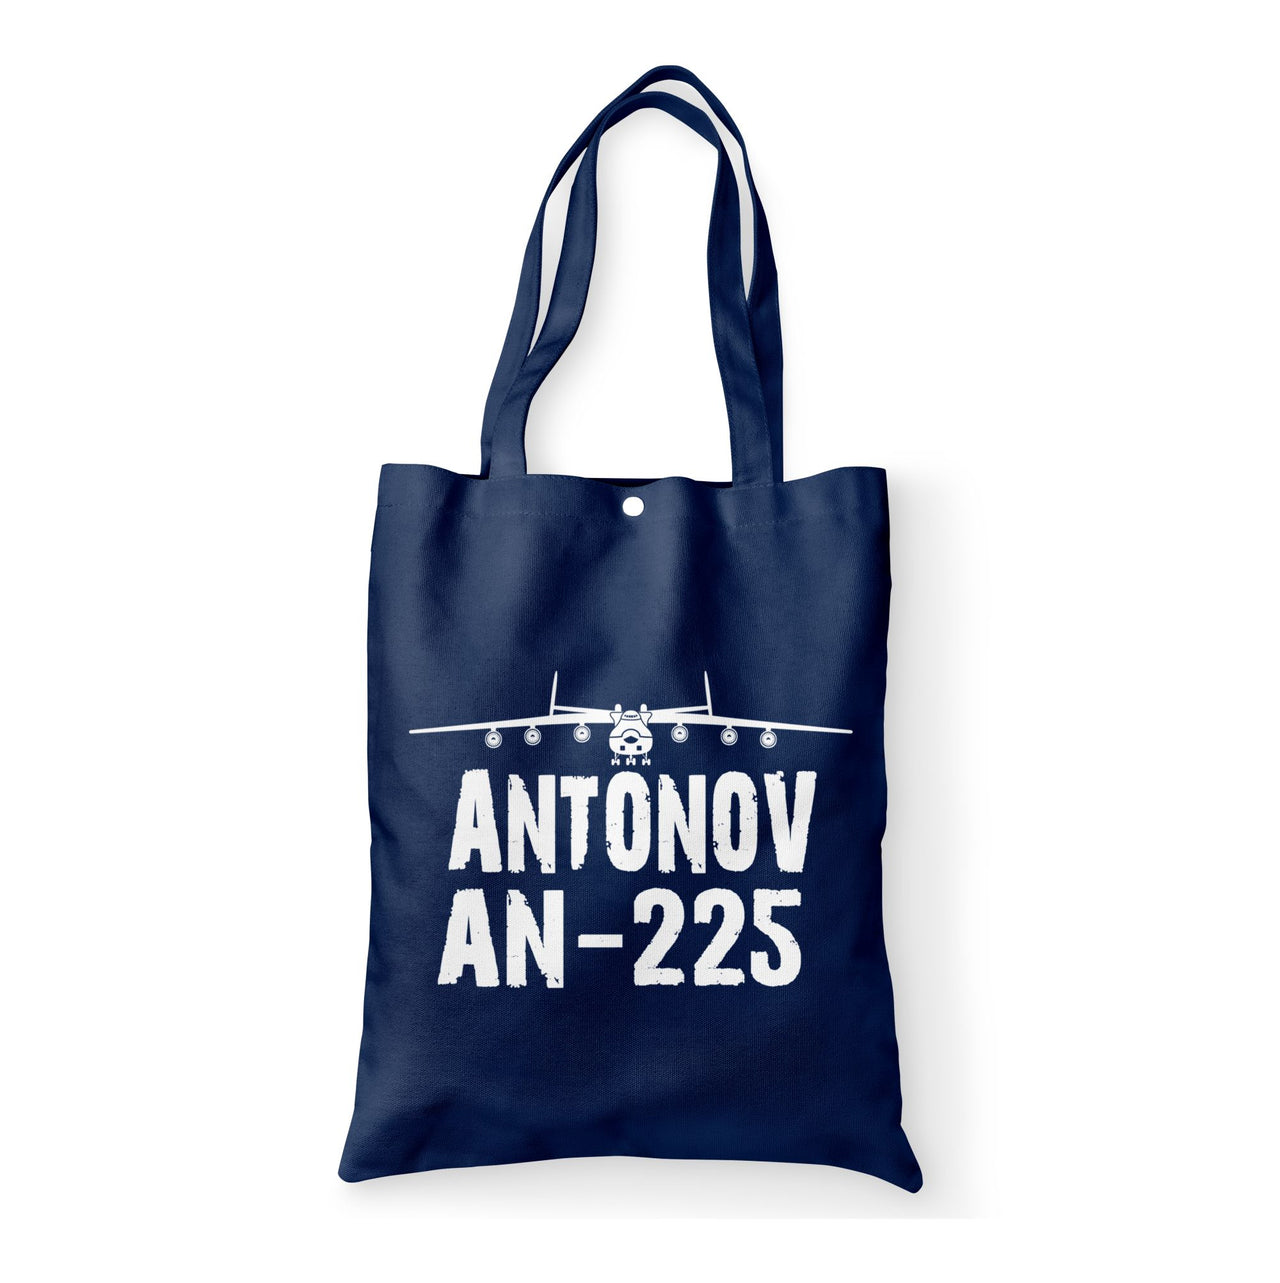 Antonov AN-225 & Plane Designed Tote Bags